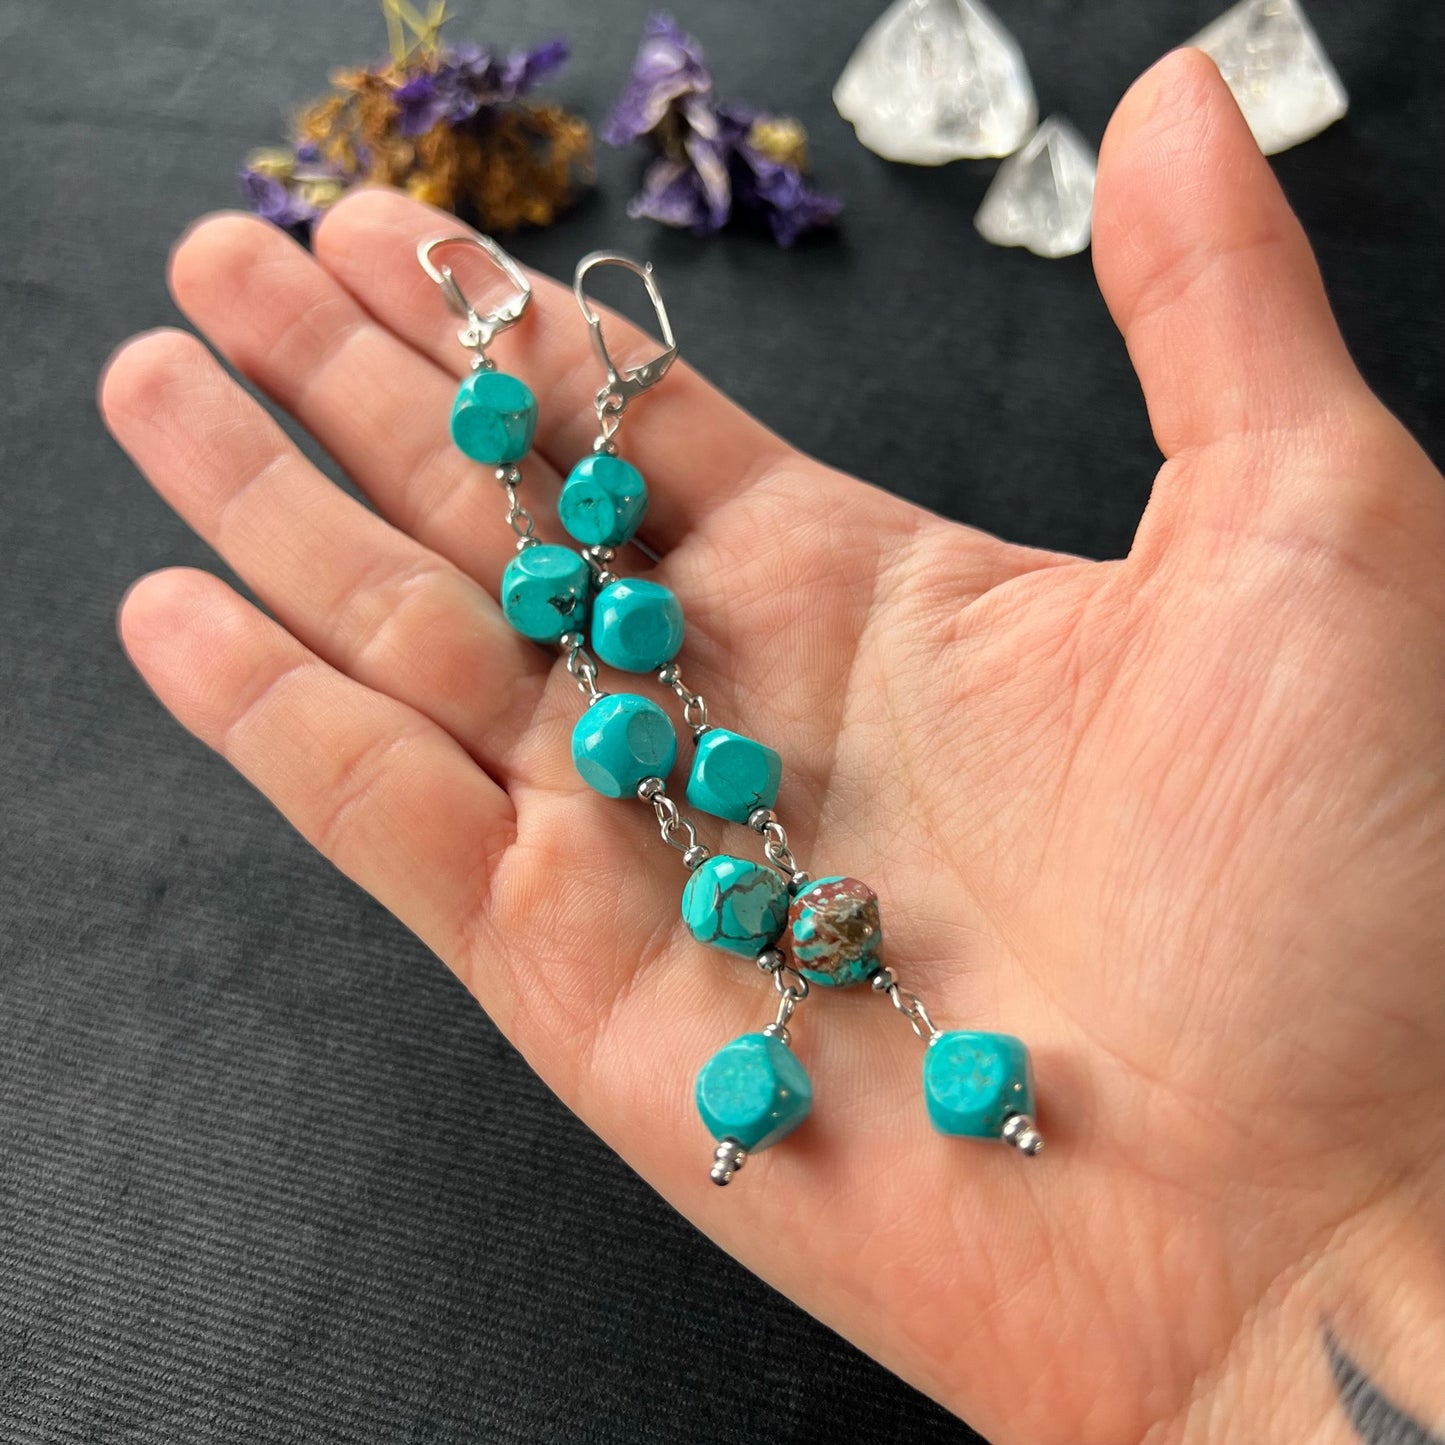 Long dangle and drop genuine turquoise earrings in stainless steel elegant spiritual earrings boho witch earrings